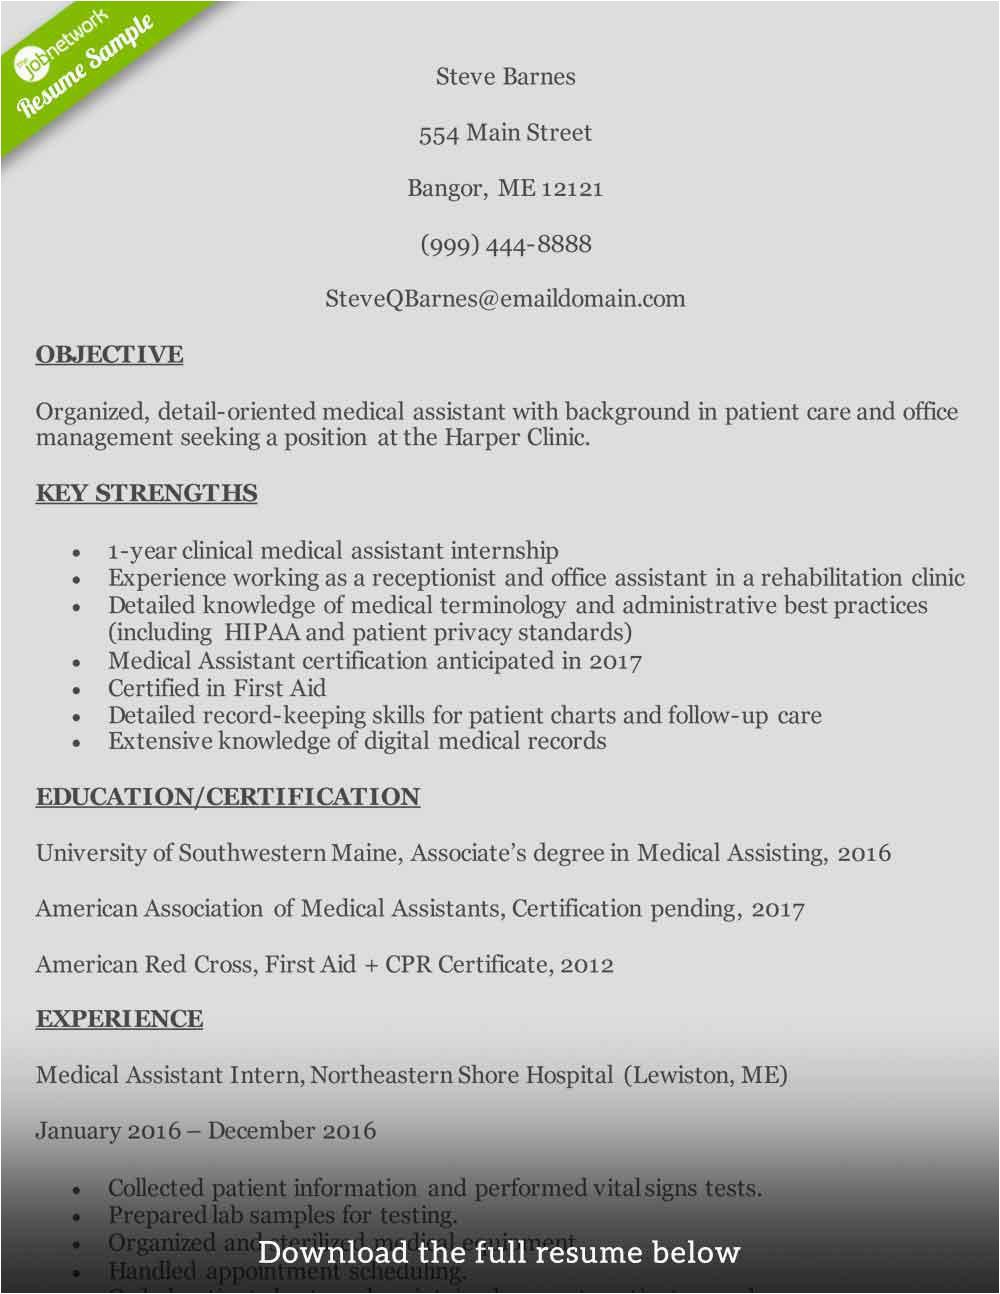 Sample Resume for Medical assistant Entry Level How to Write A Medical assistant Resume with Examples